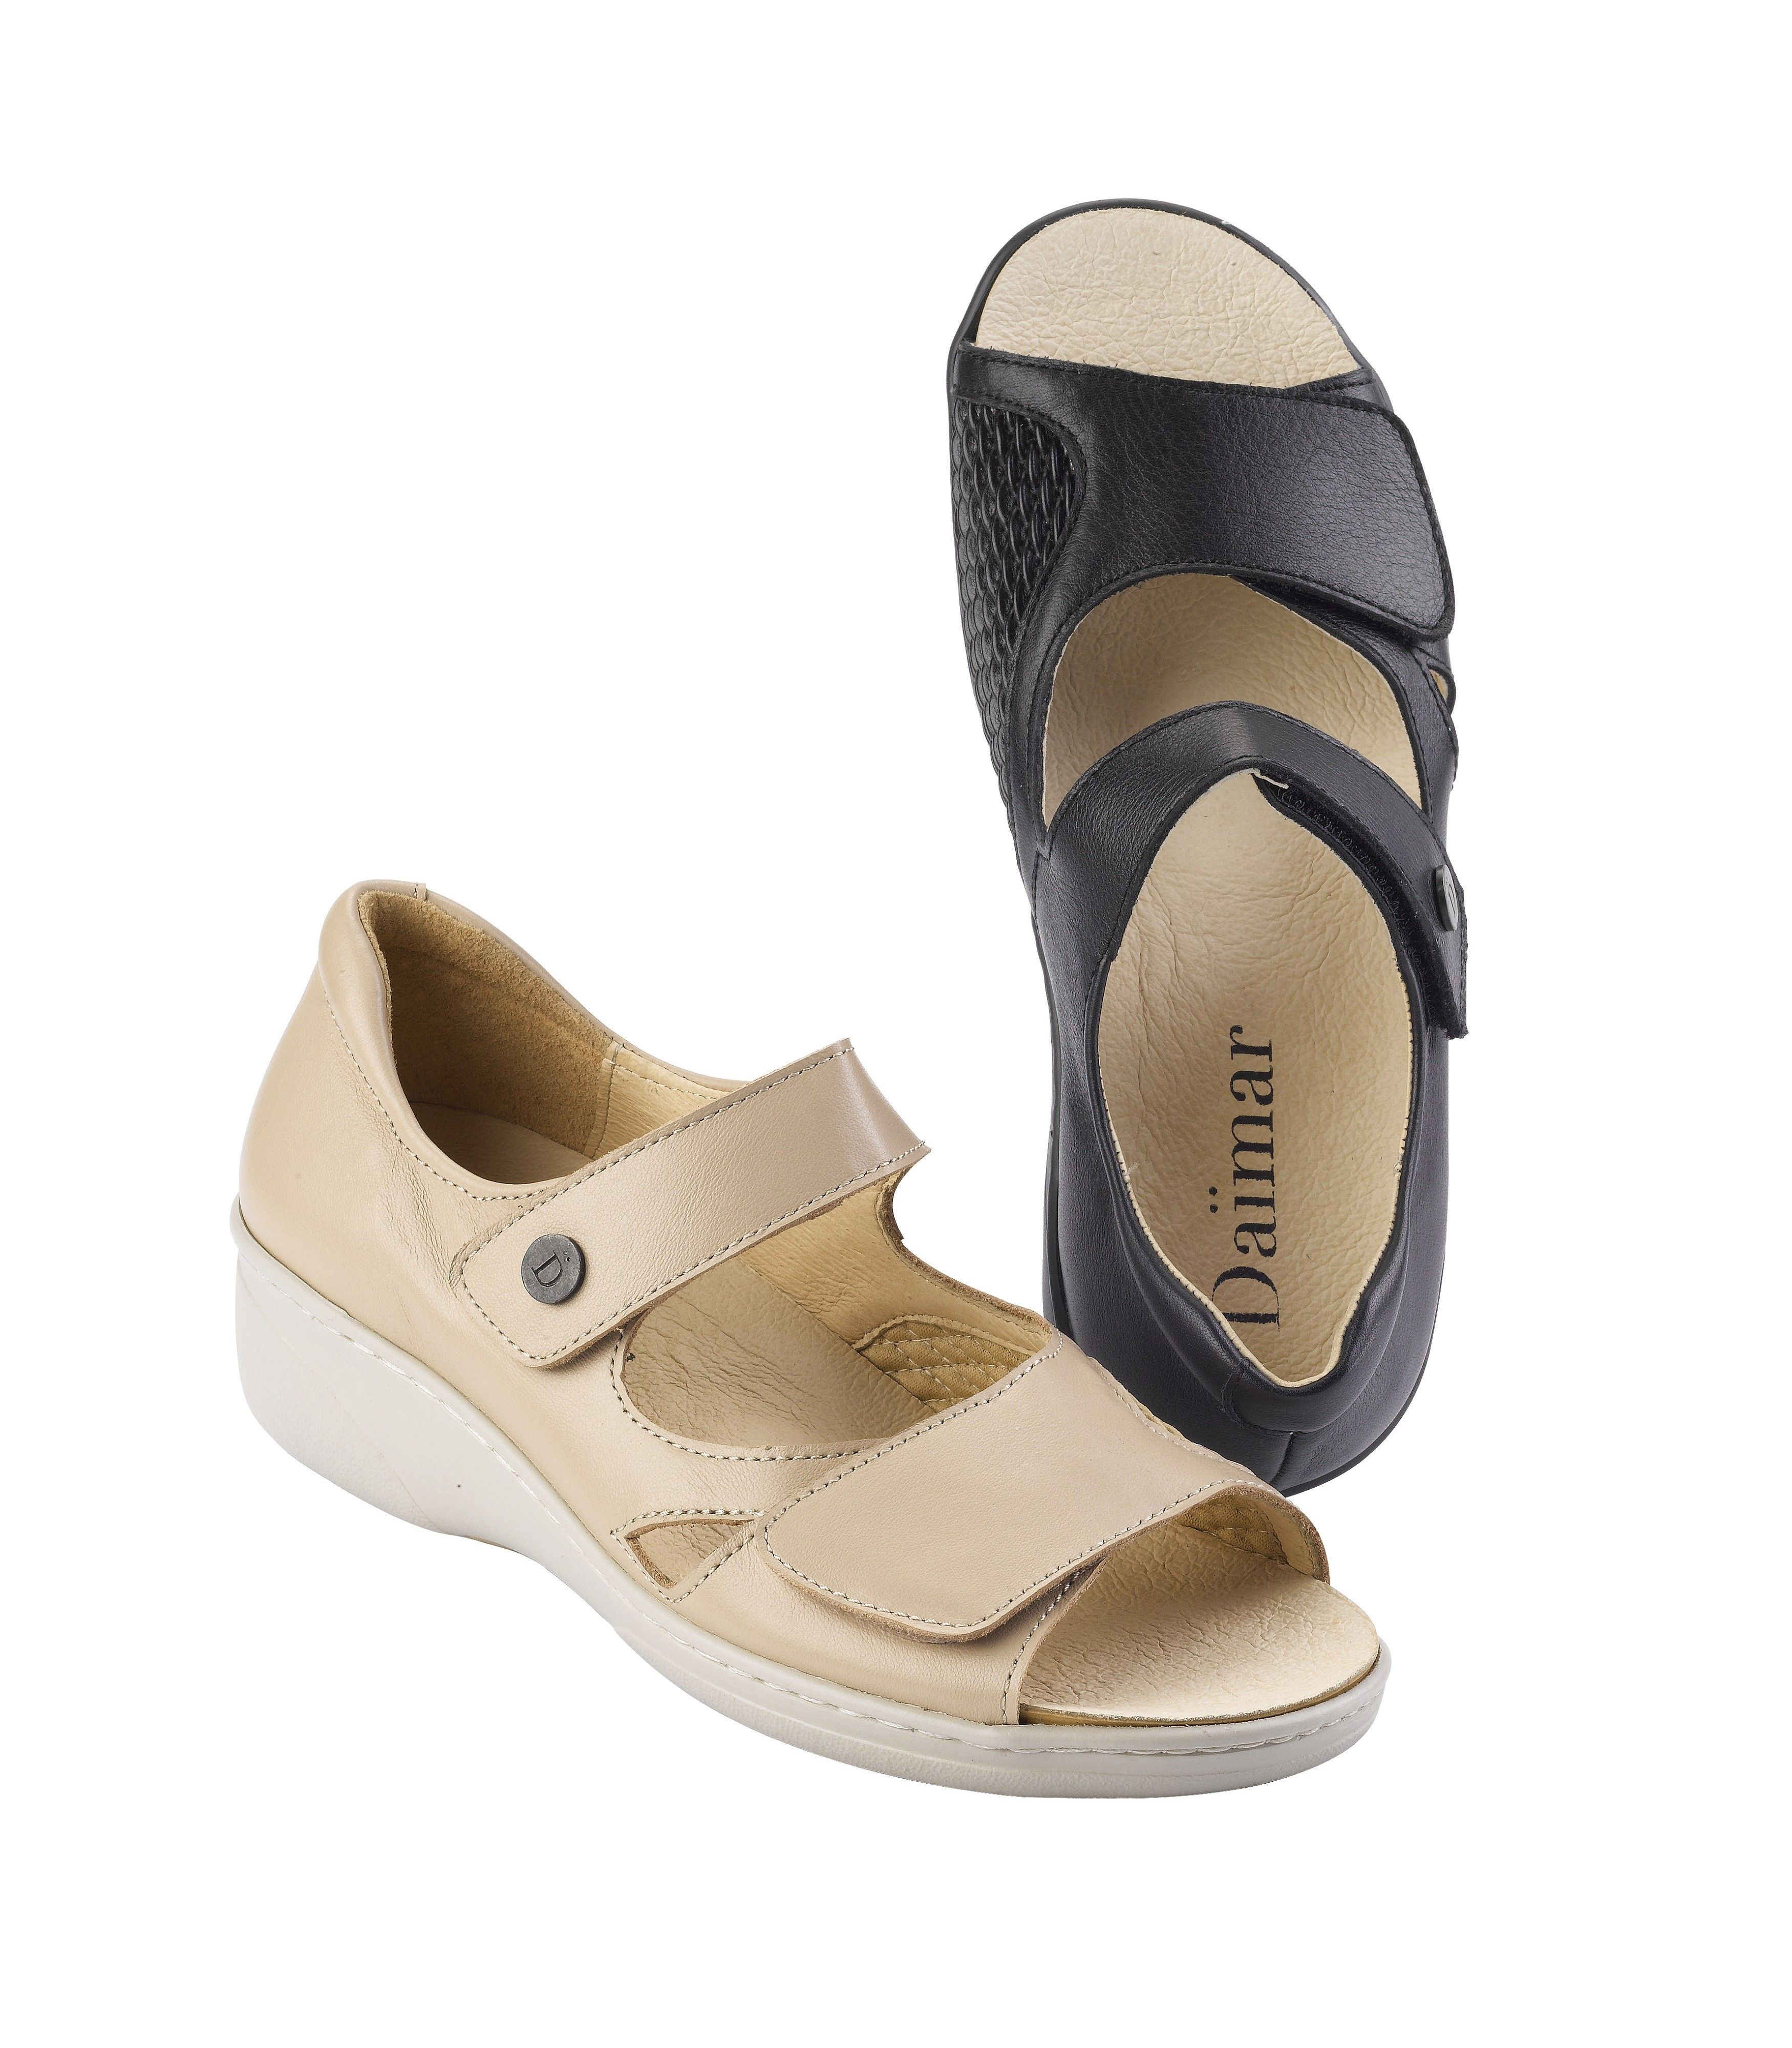 Sandalia ligera para pies anchos especial juanetes de Daimar